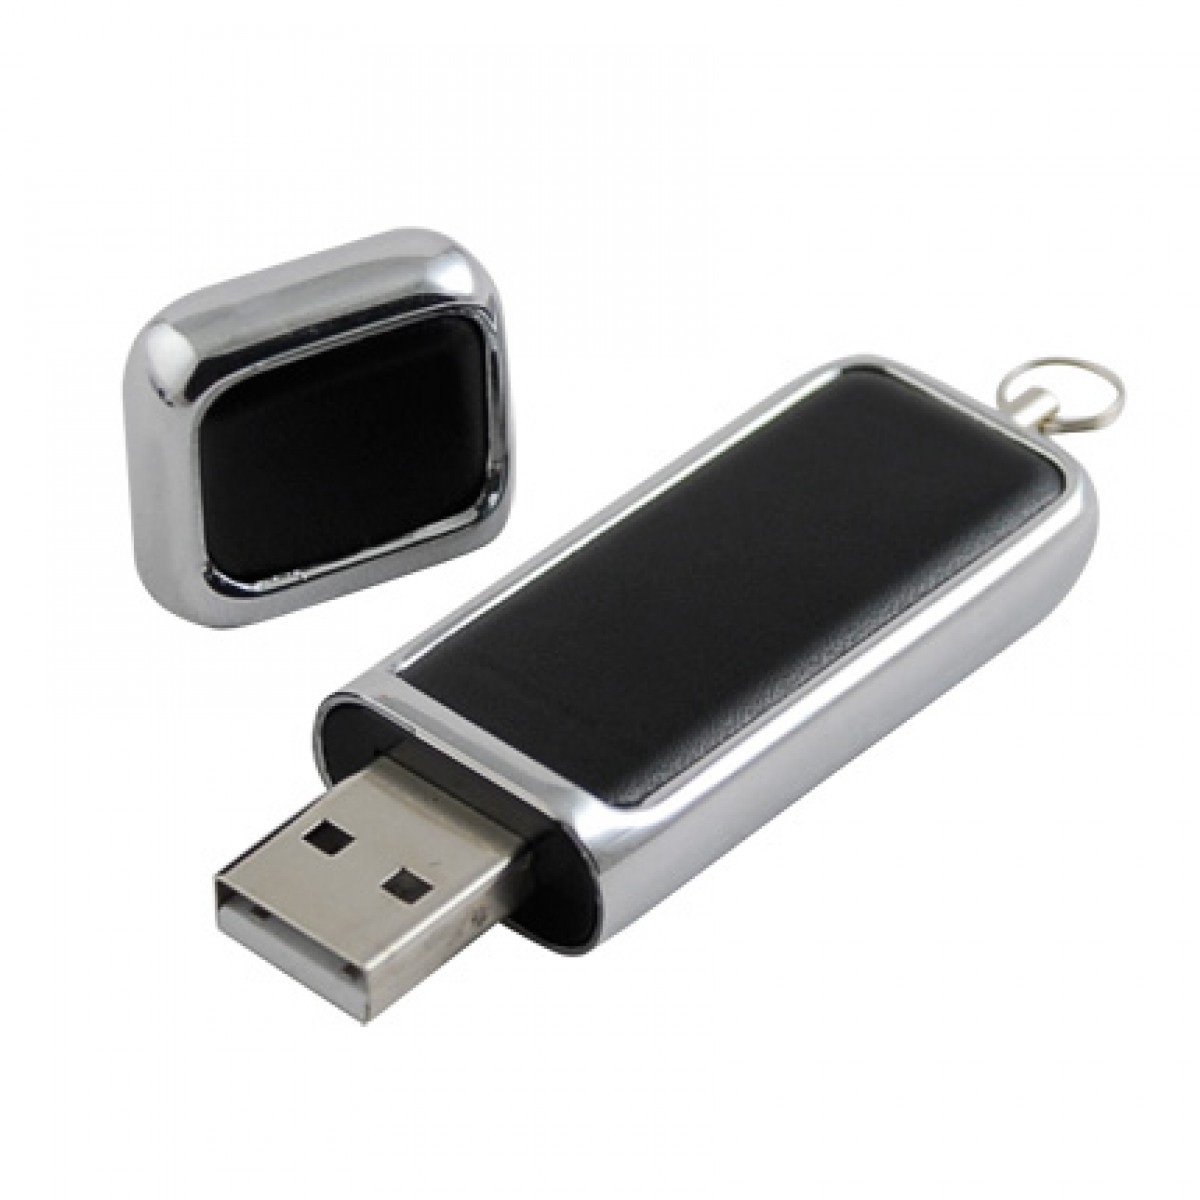 Купить флешку в машину. Флешка Freecom USB Card 16gb. Флешки юсб маленькие 16 ГБ. Флэшка 3.0 металл Kingston. Маленькая флешка USB 32гб.